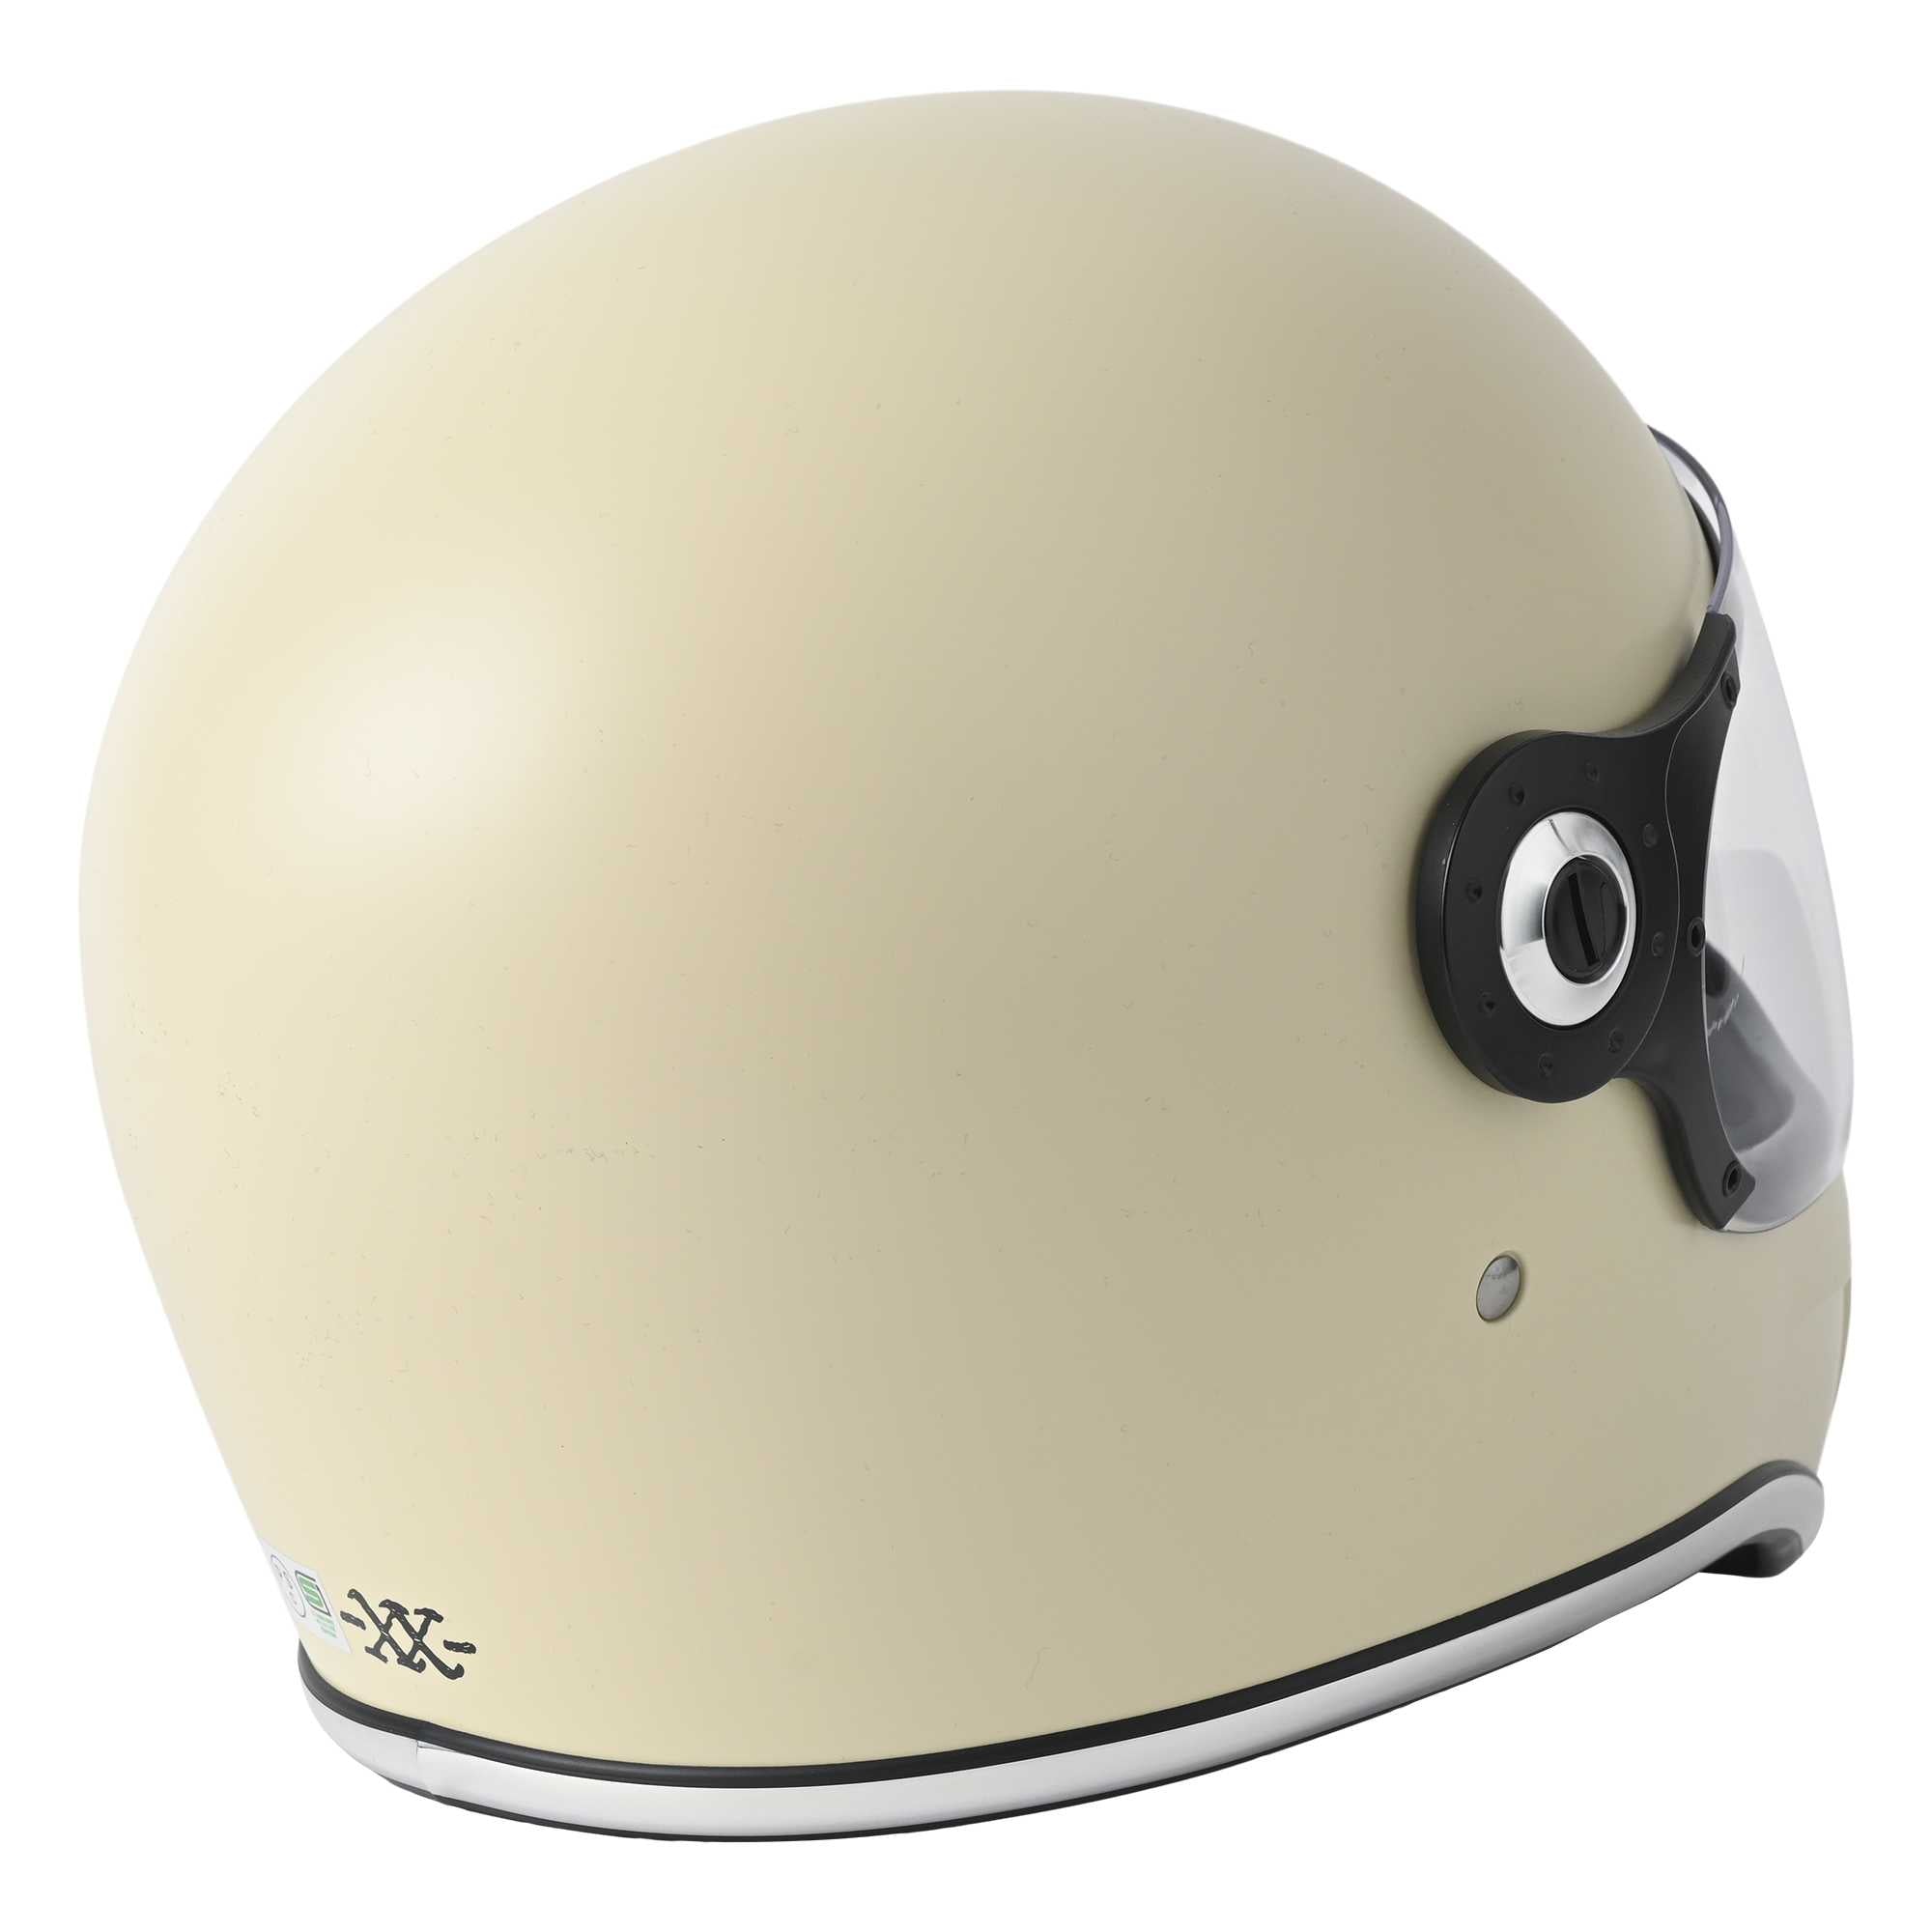 RIDEZ XX HELMET 数量限定モデル OFF WHITE バイク用フルフェイスヘルメット